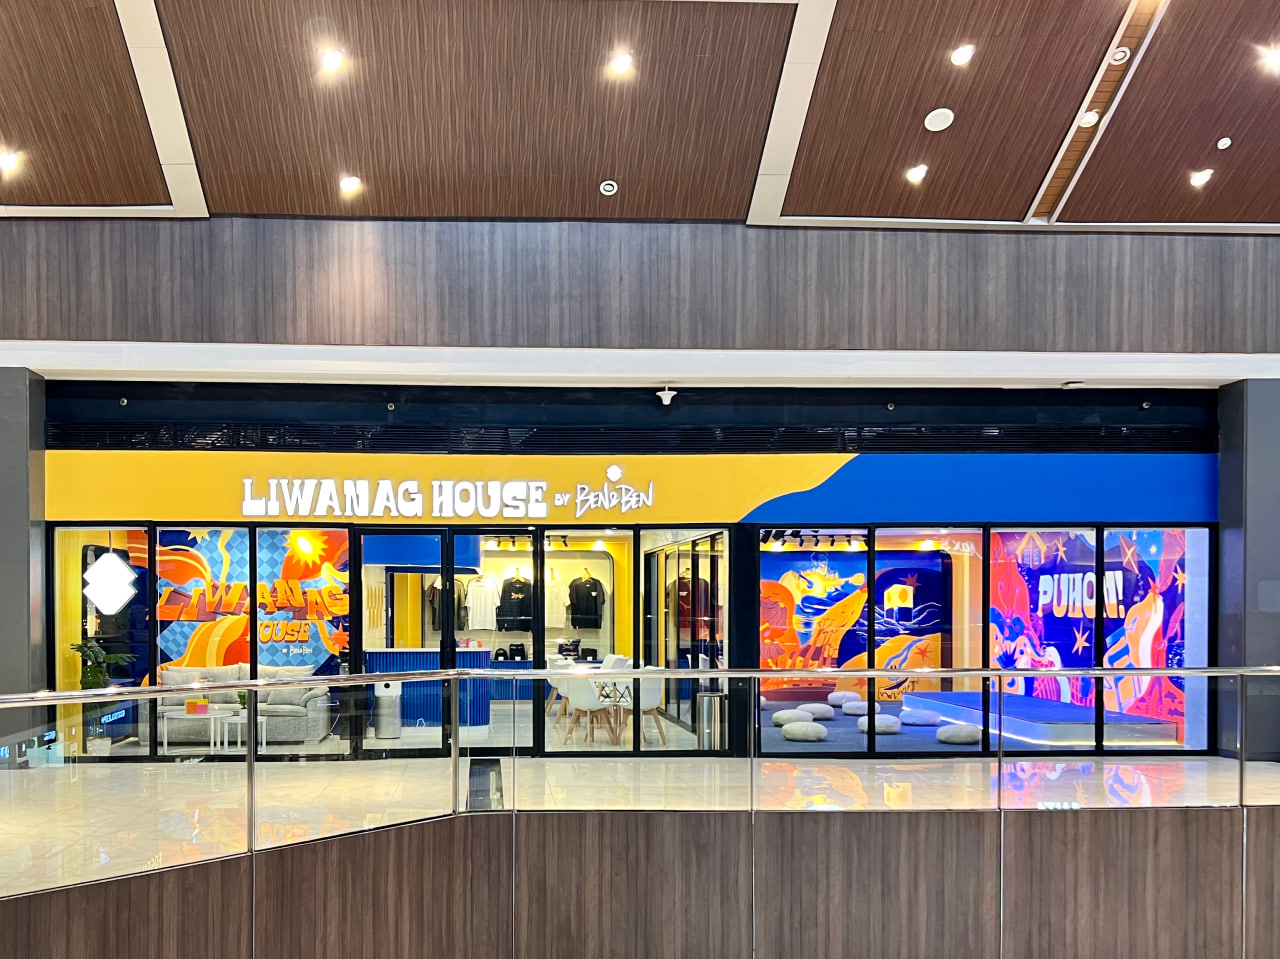 How To Get Exclusive Passes To Ben&Ben's Liwanag House Launch